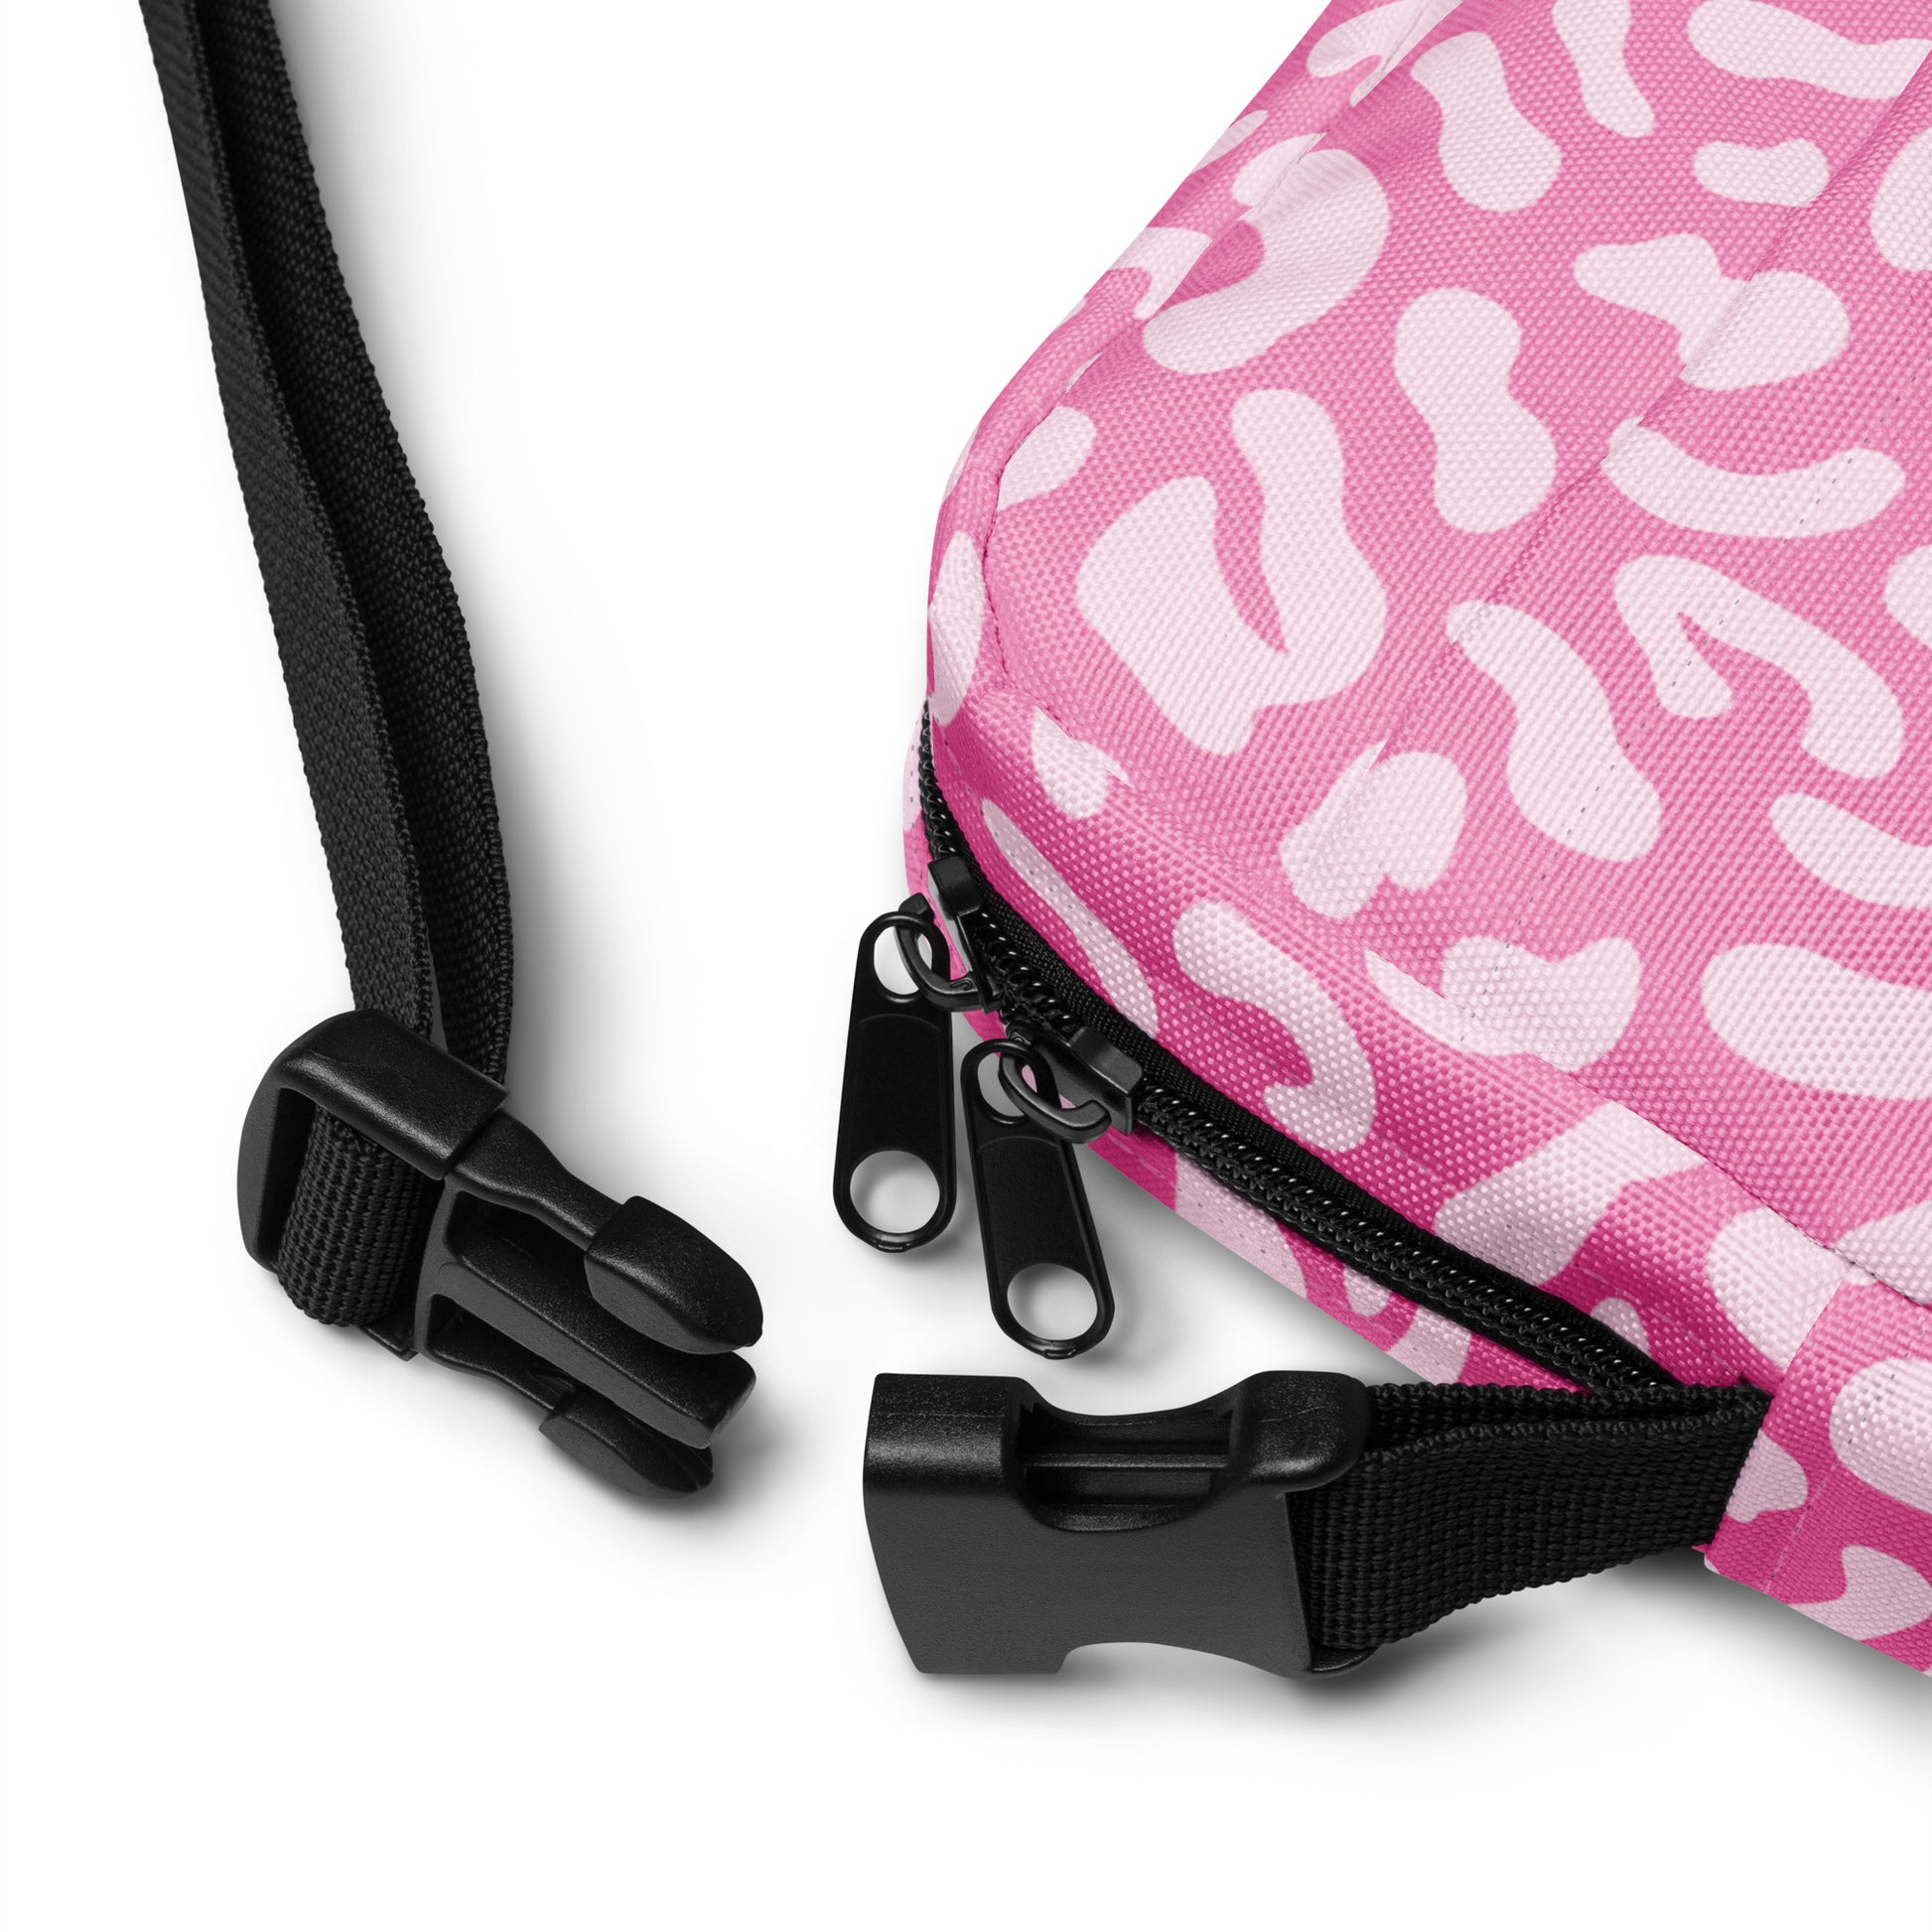 Pink Leopard - Utility crossbody bag Utility Cross Body Bag animal